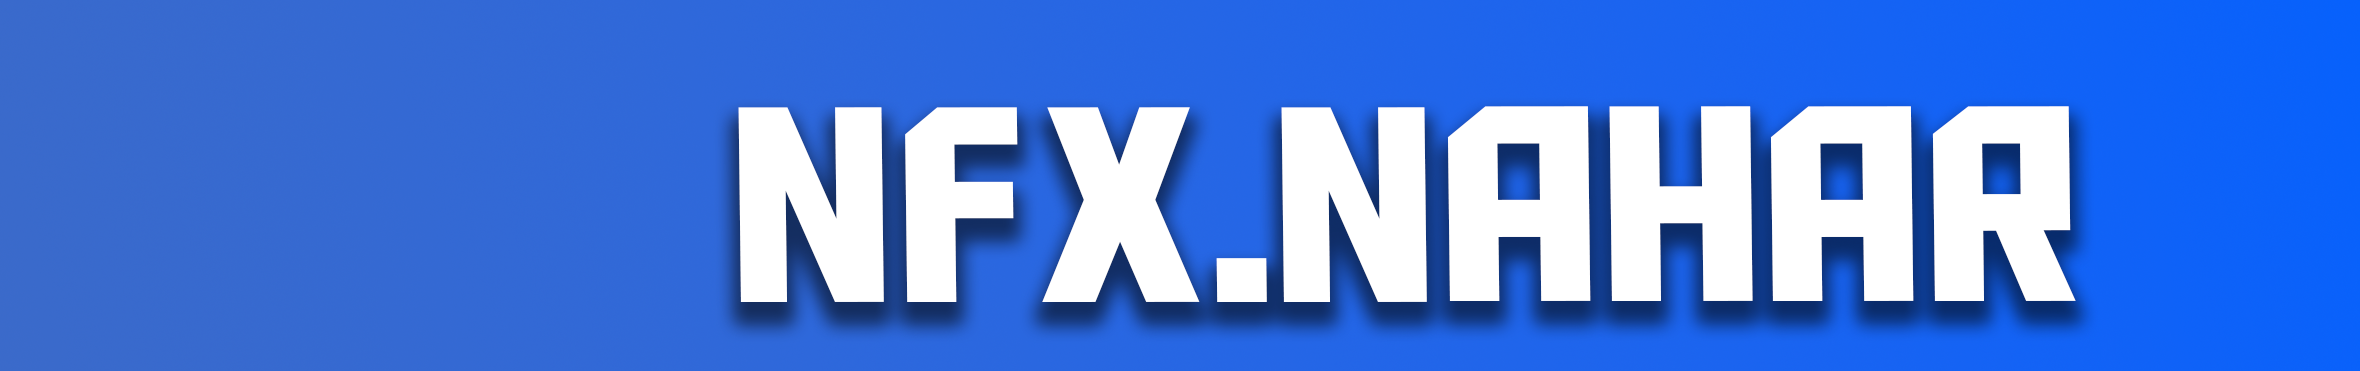 NFX. NAHAR's profile banner